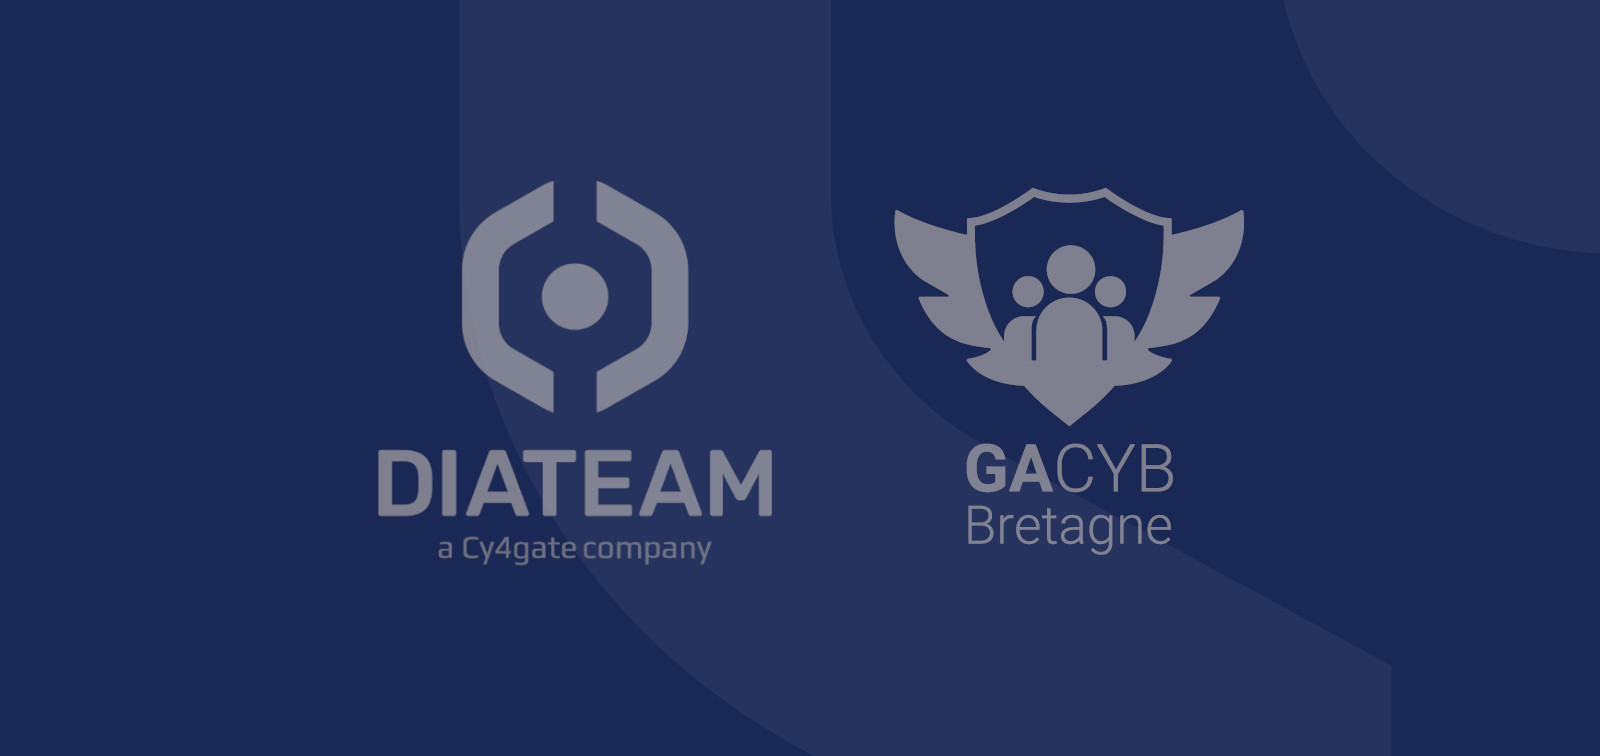 DIATEAM is now a member of GACYB Bretagne